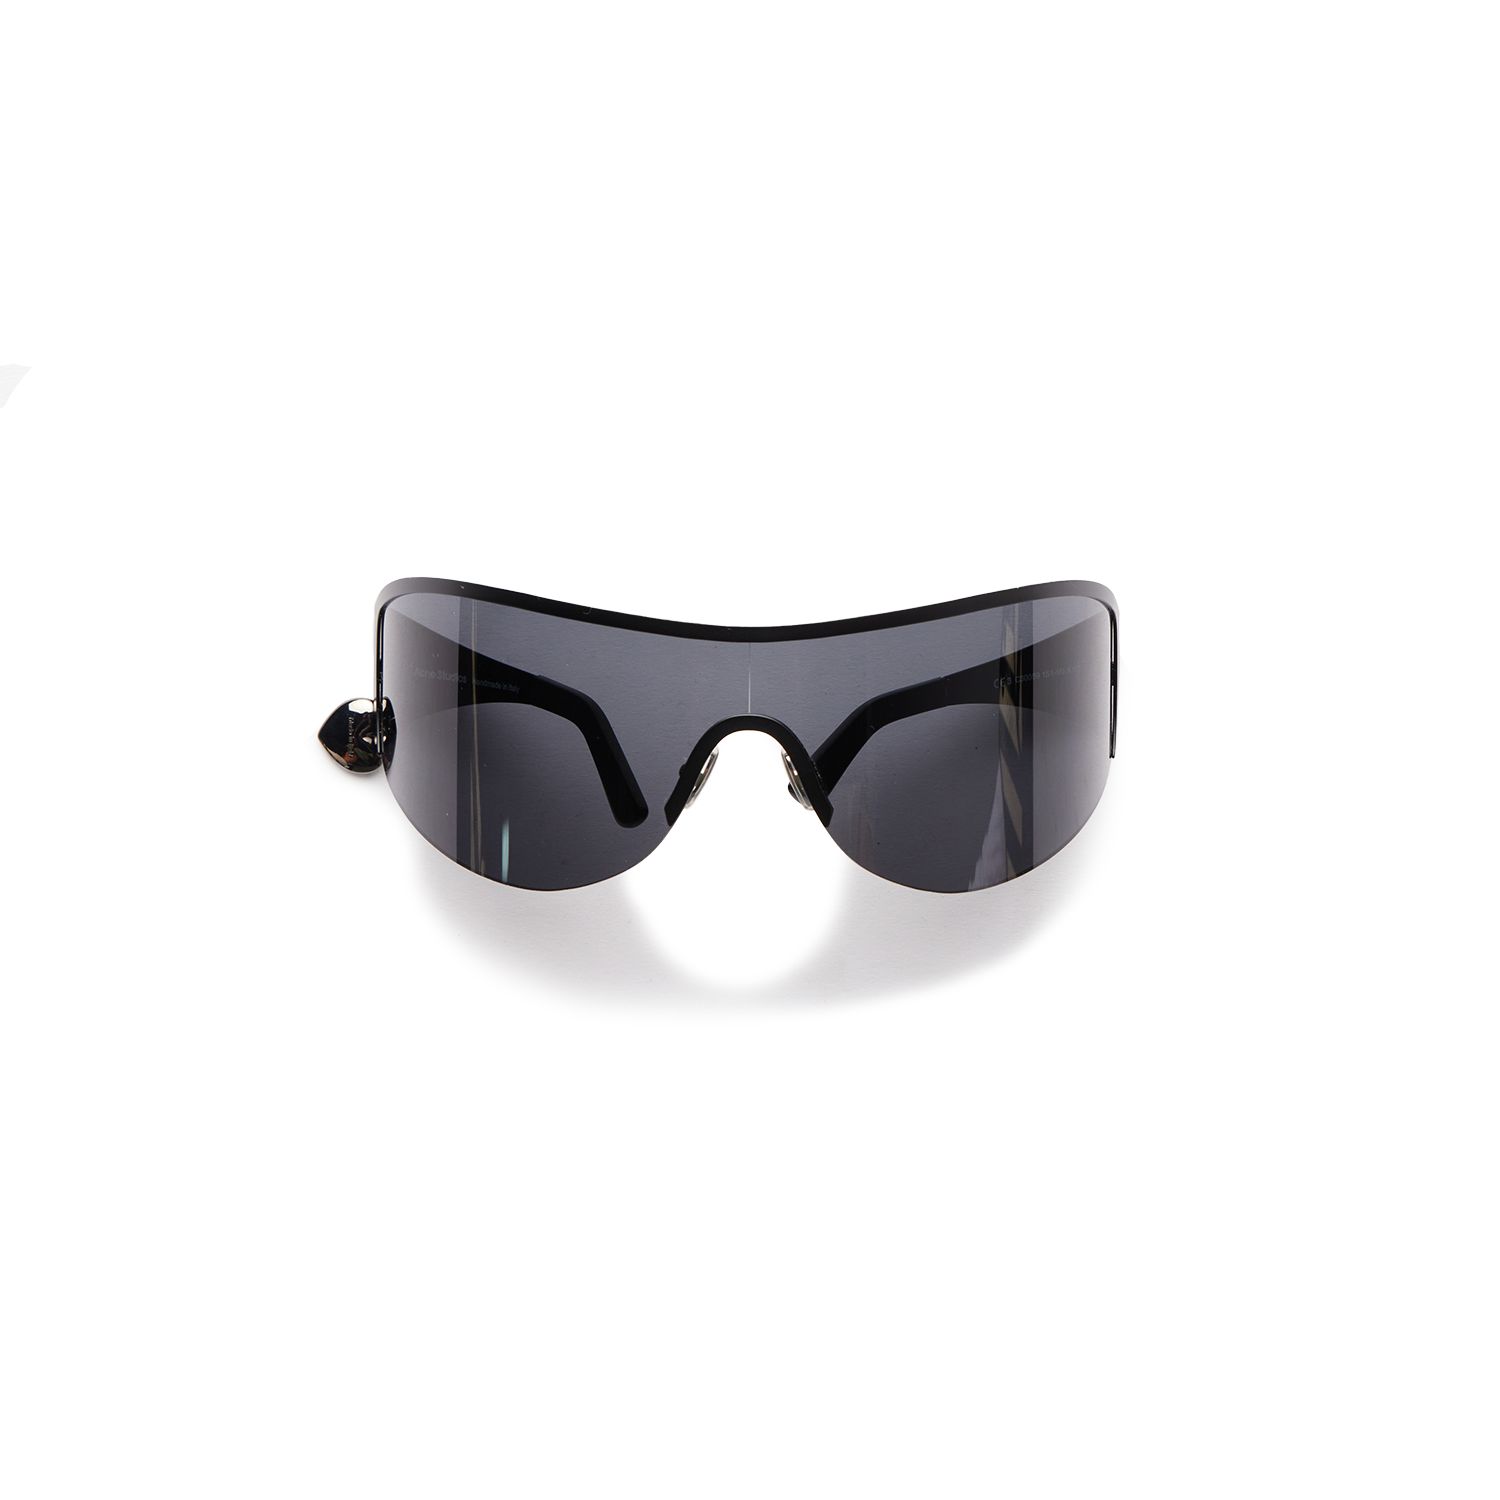 ACNE STUDIOS - Metal Frame Sunglasses (Black) product image